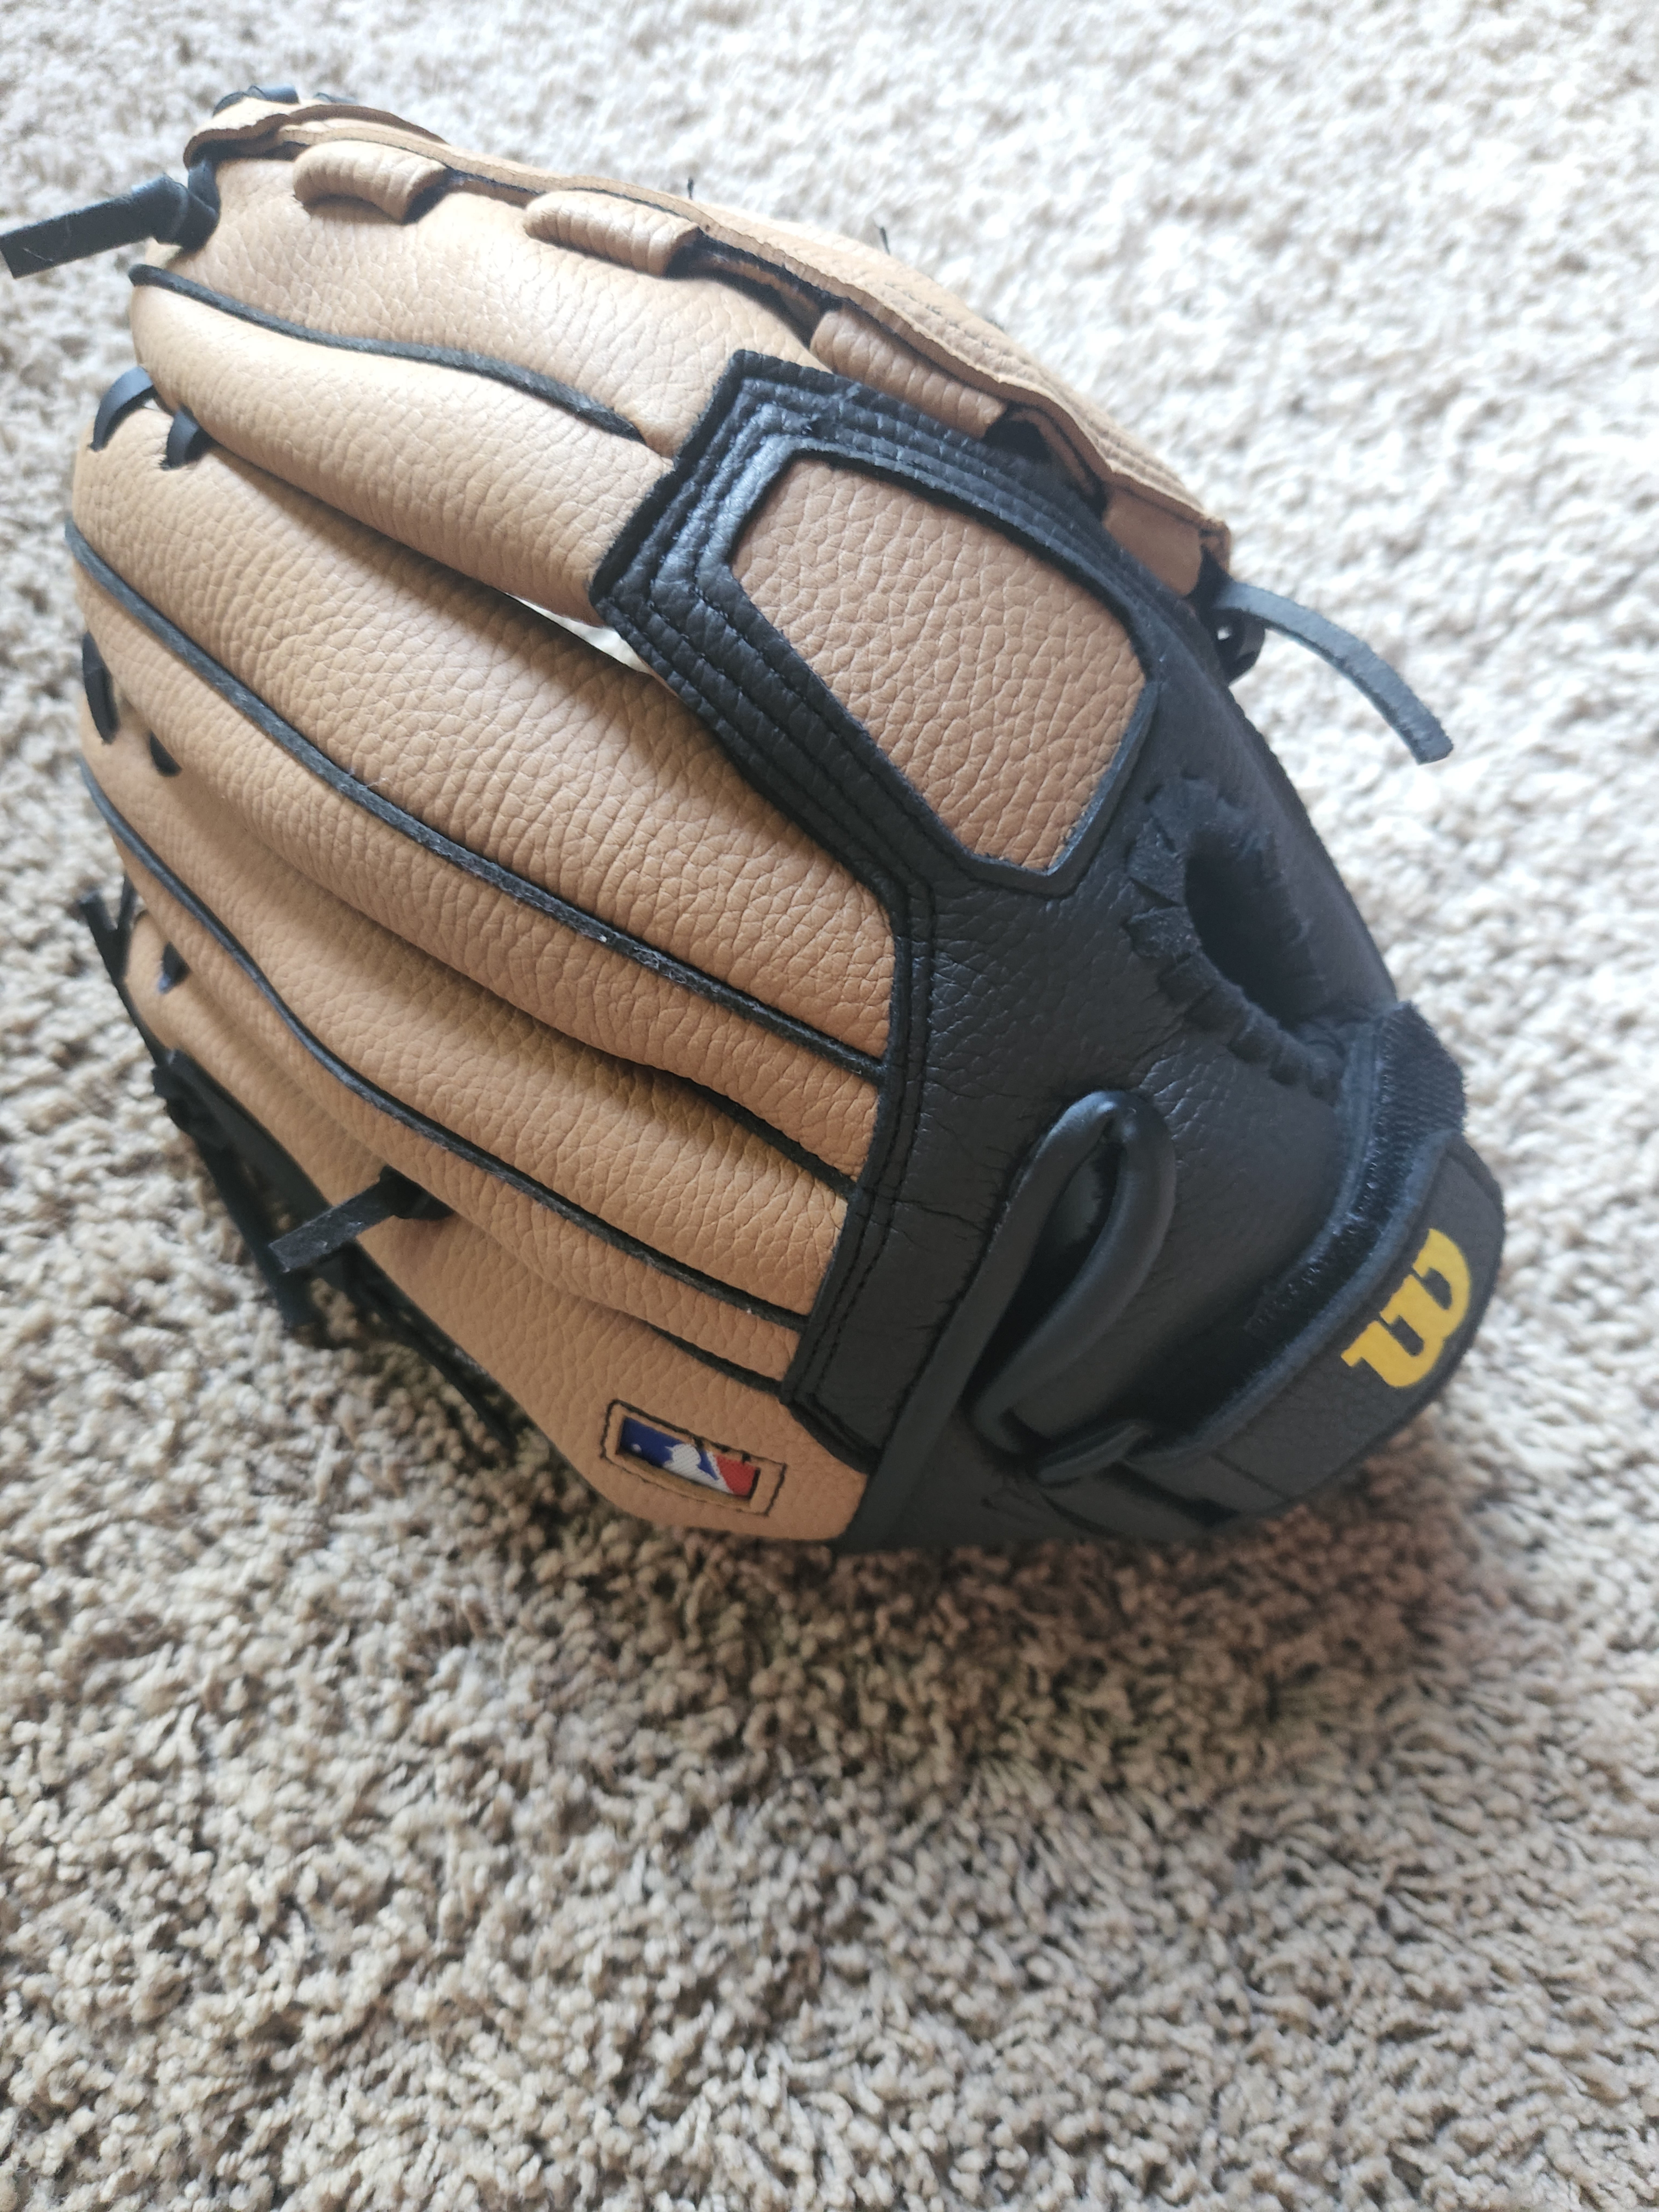 New Wilson Right Hand Throw A300 Baseball Glove 11.5